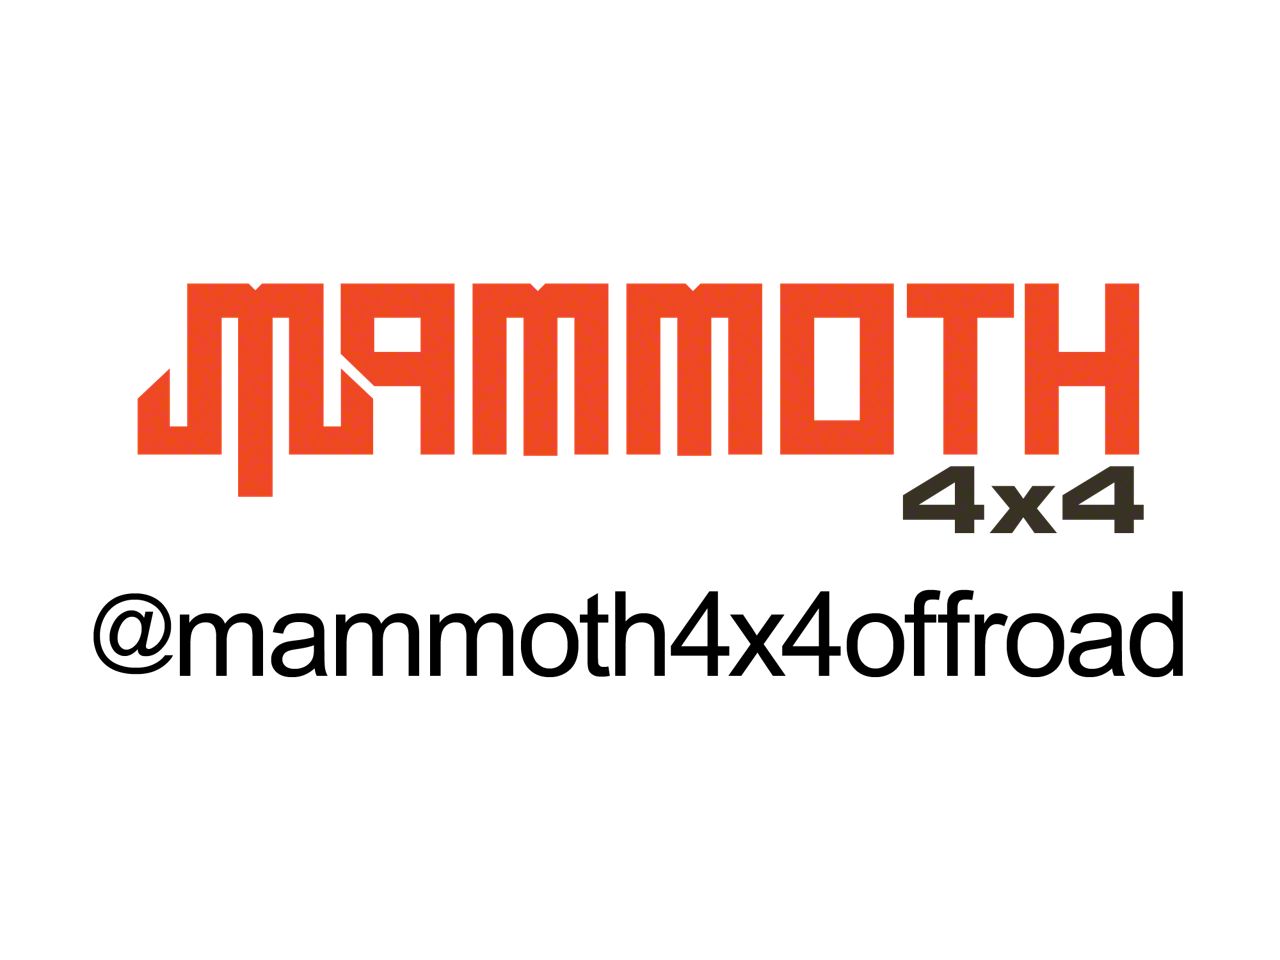 Mammoth Parts